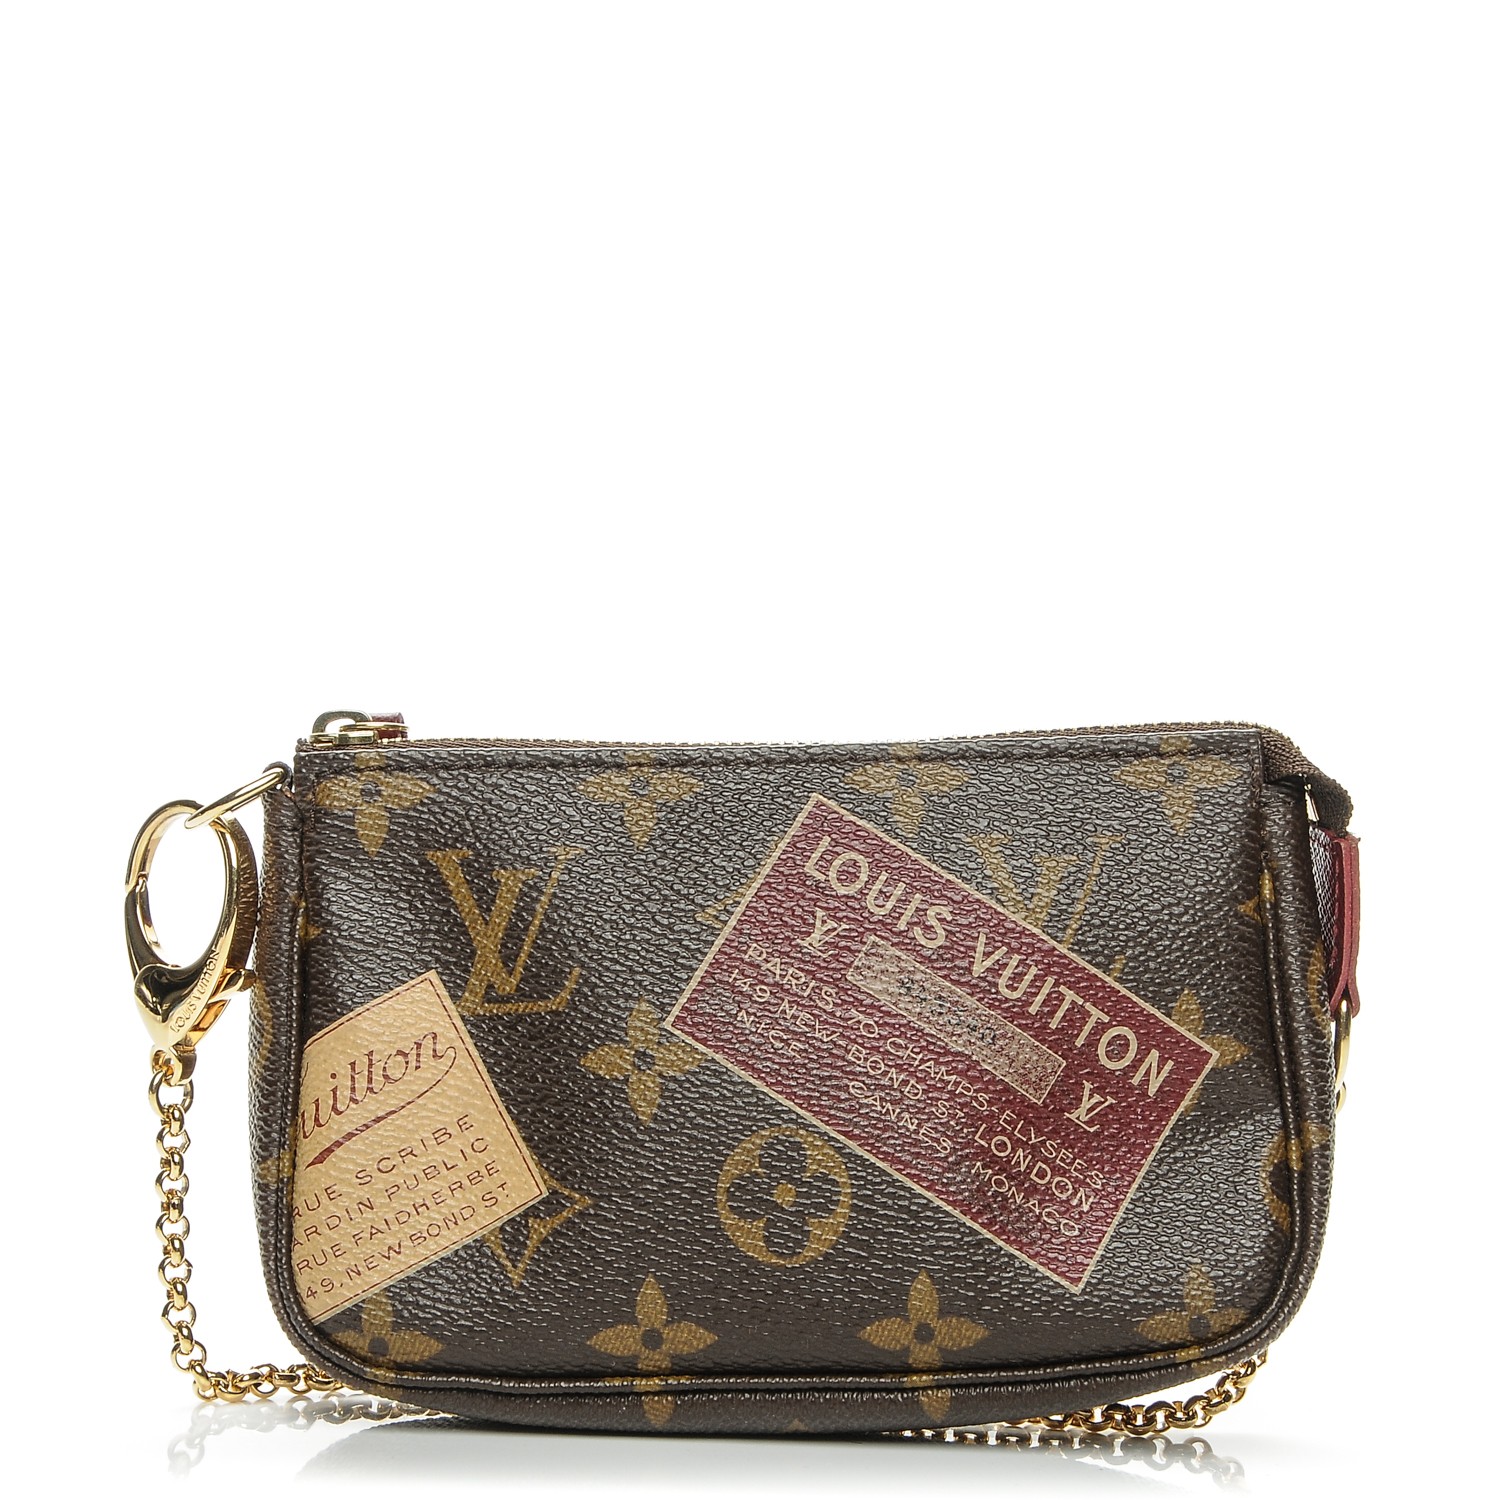 Louis Vuitton Trunks & Bags Mini Pochette